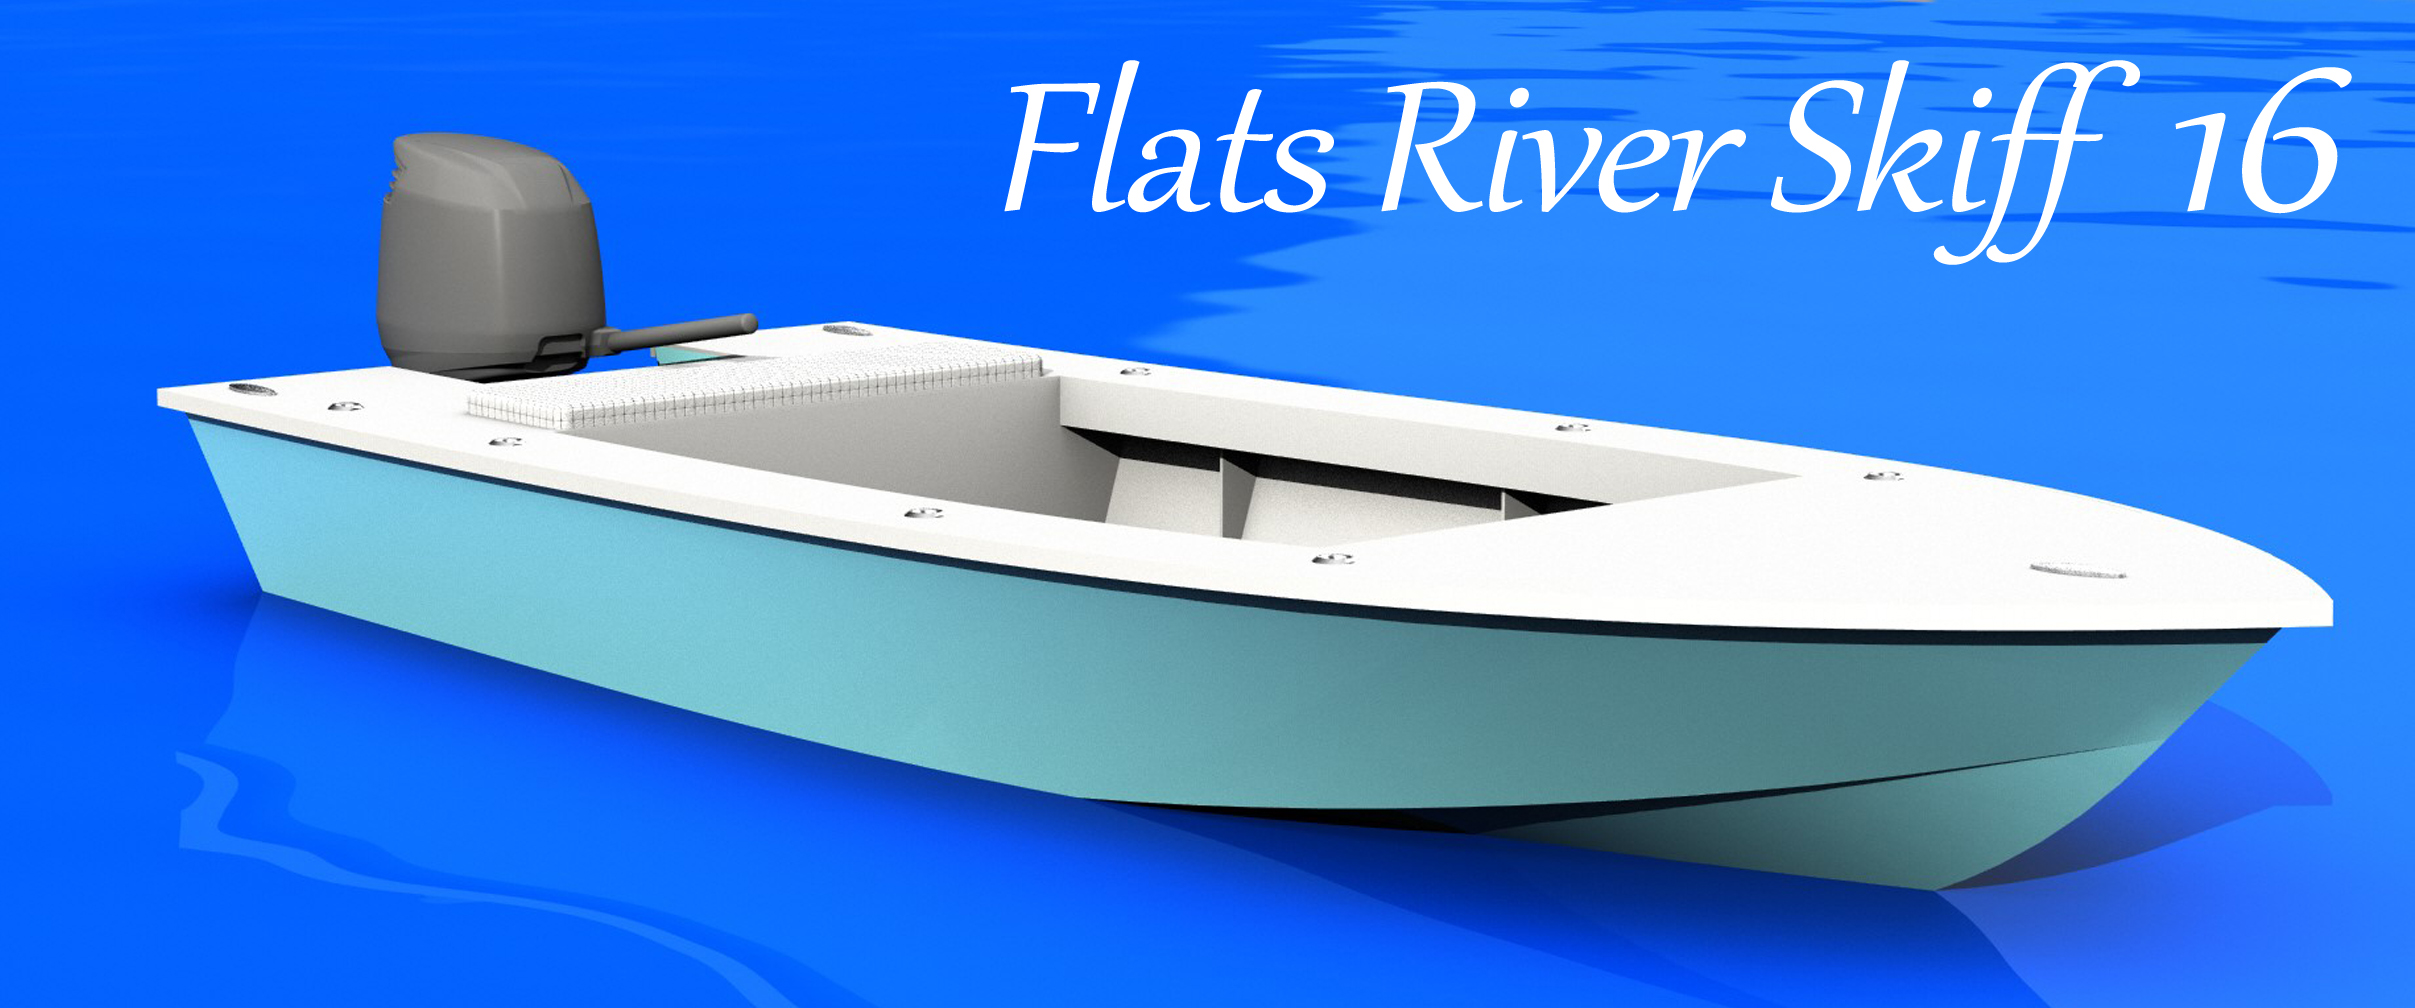 Flats River Skiff 16 - Build Your Own Flats Skiff